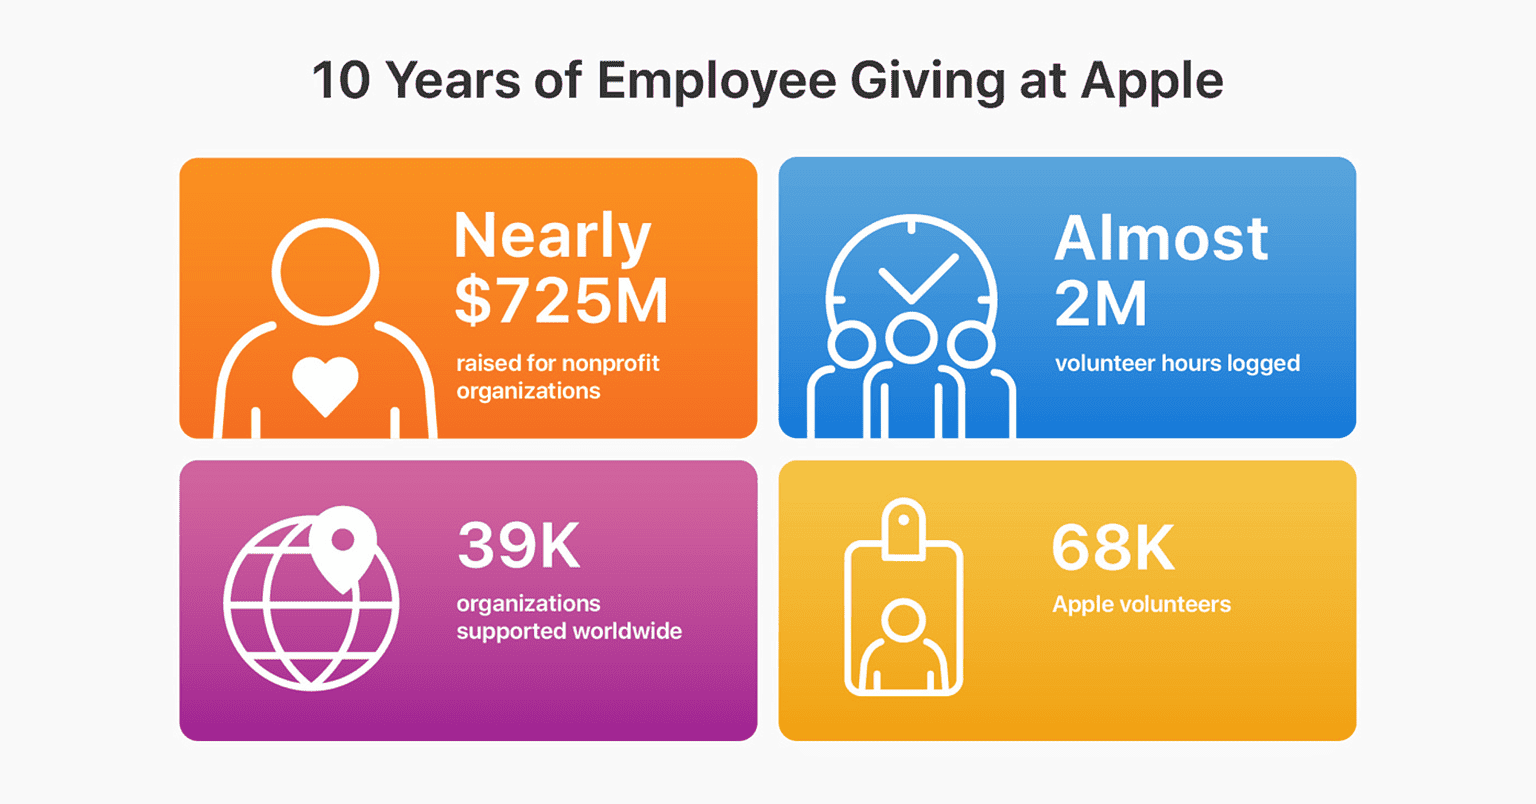 Apple’s Employee Giving Program Has Raised US725 Million in 10 Years